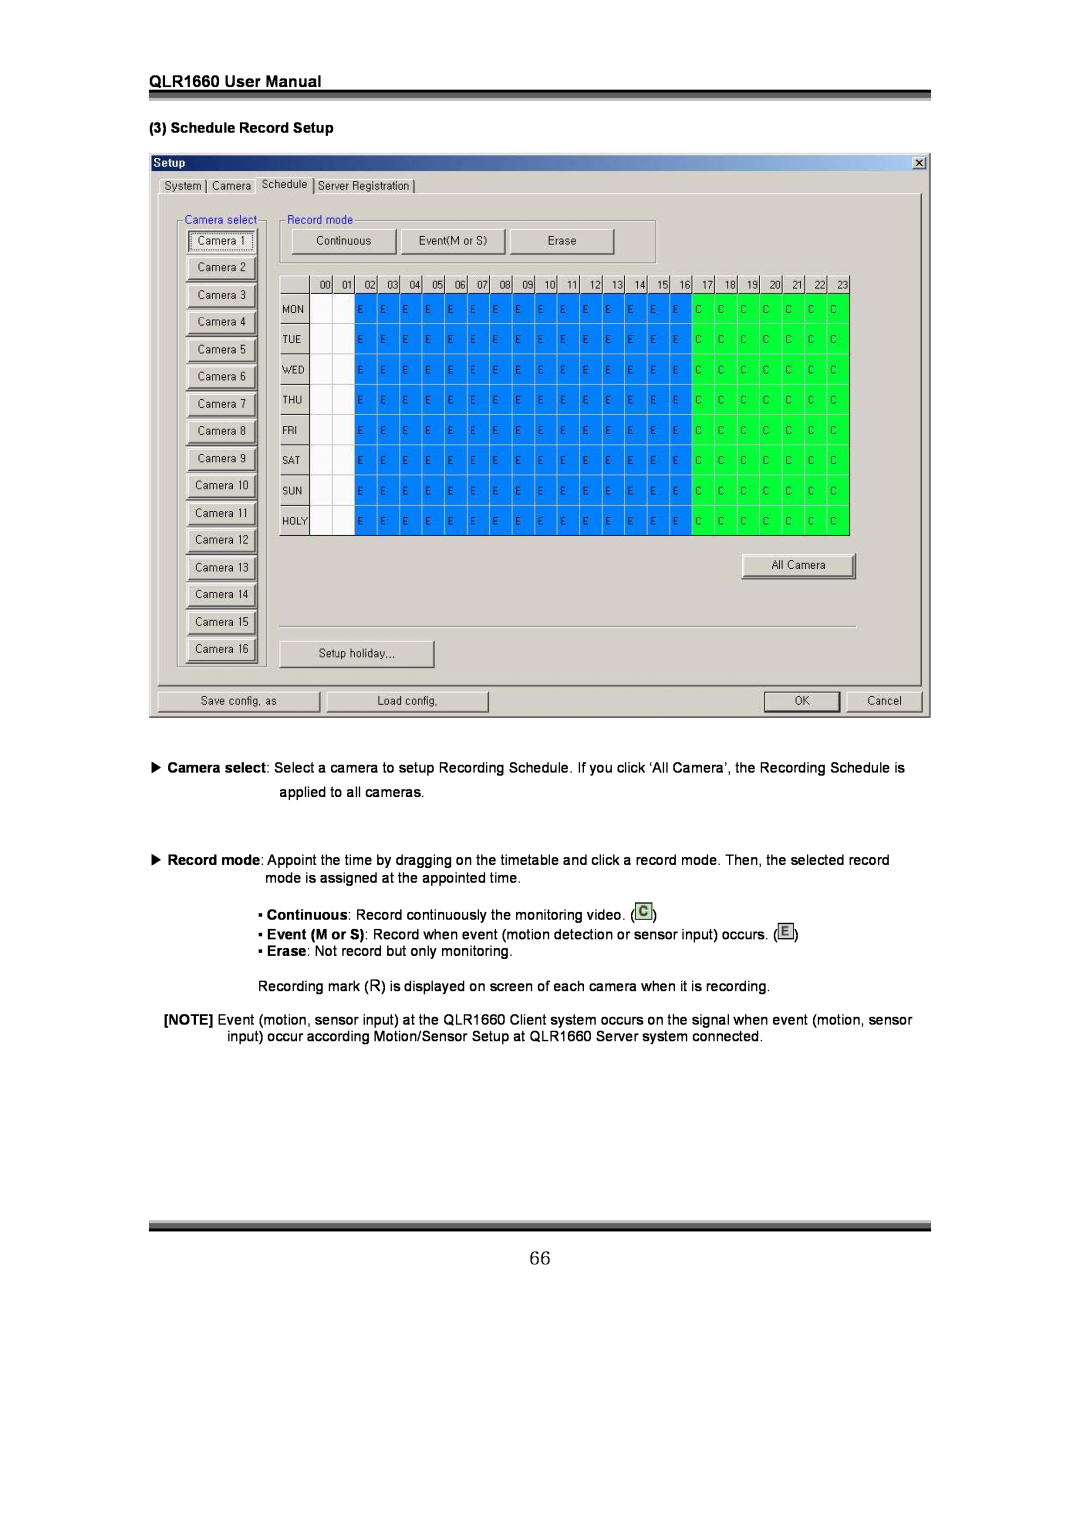 LOREX Technology instruction manual Schedule Record Setup, QLR1660 User Manual 